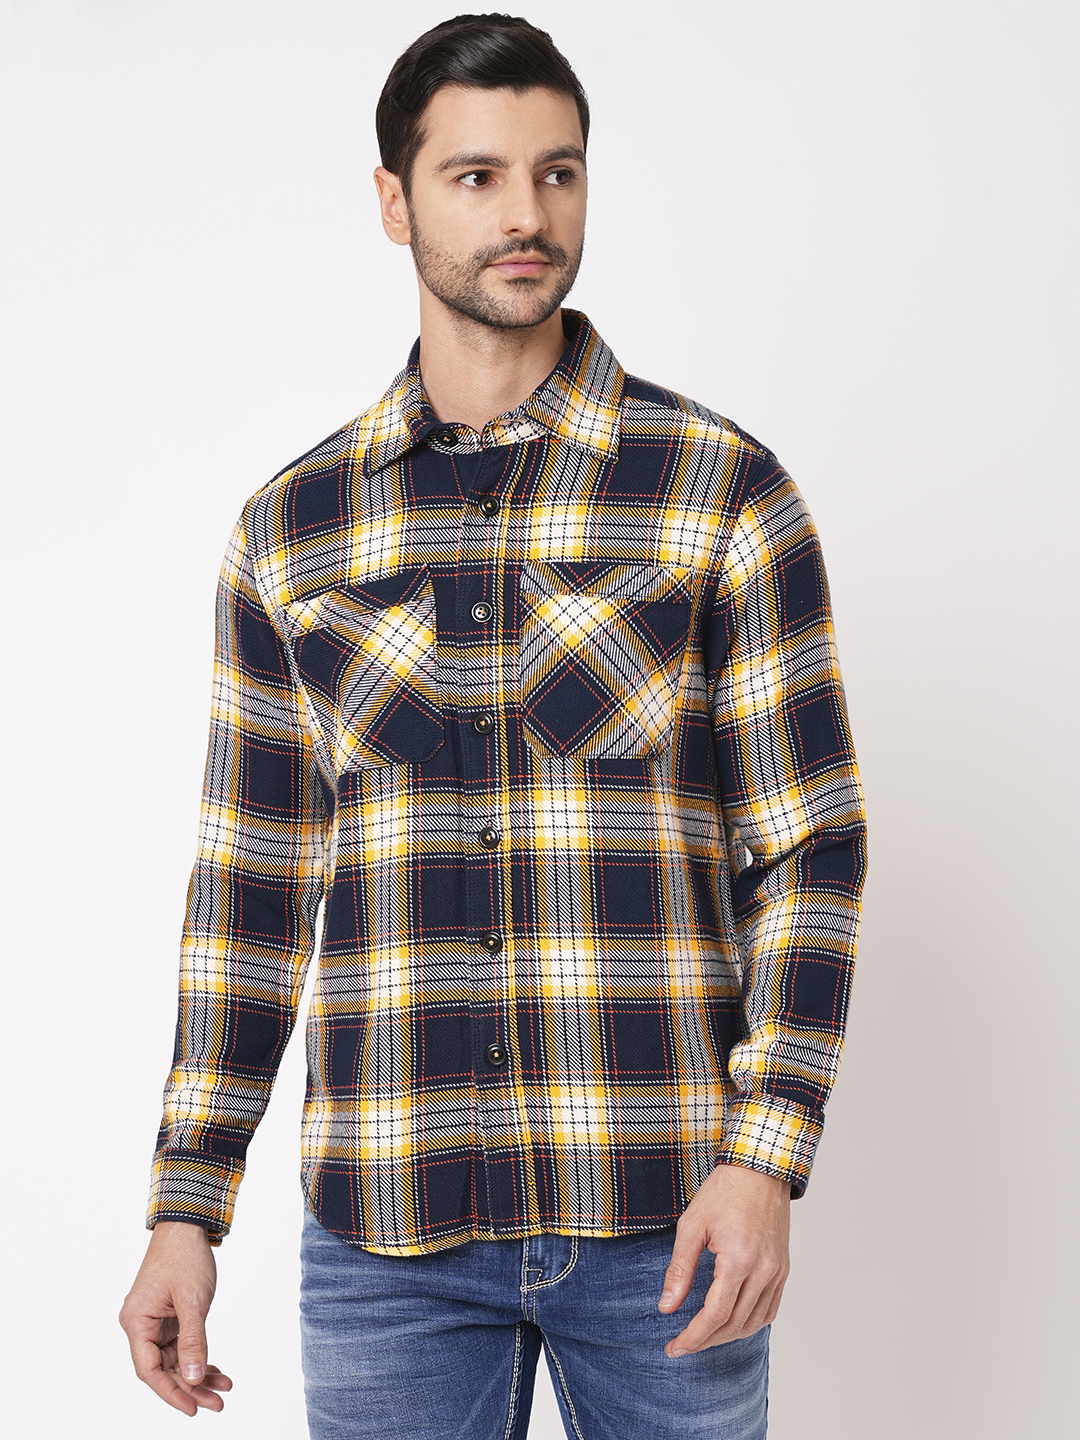 Shop Latest Clinen Dark Grey Chex Shirt for Man – Badmaash